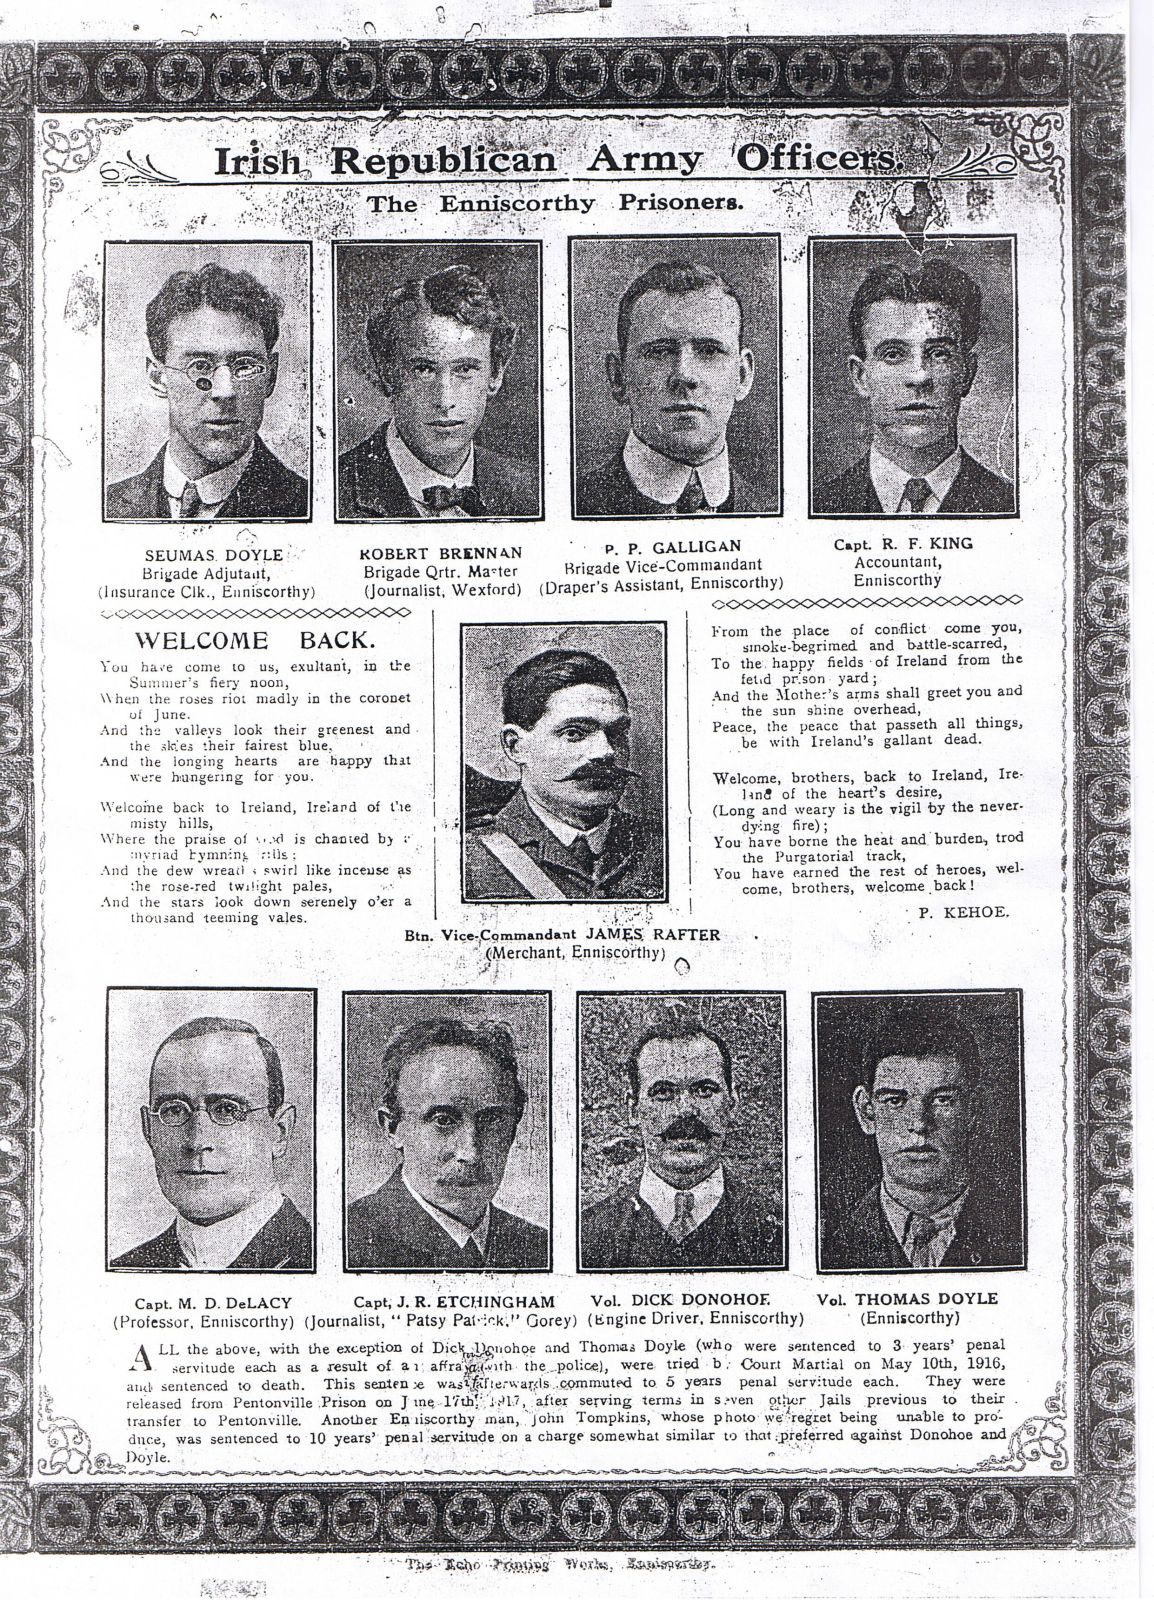 Enniscorthy prisonors 1916